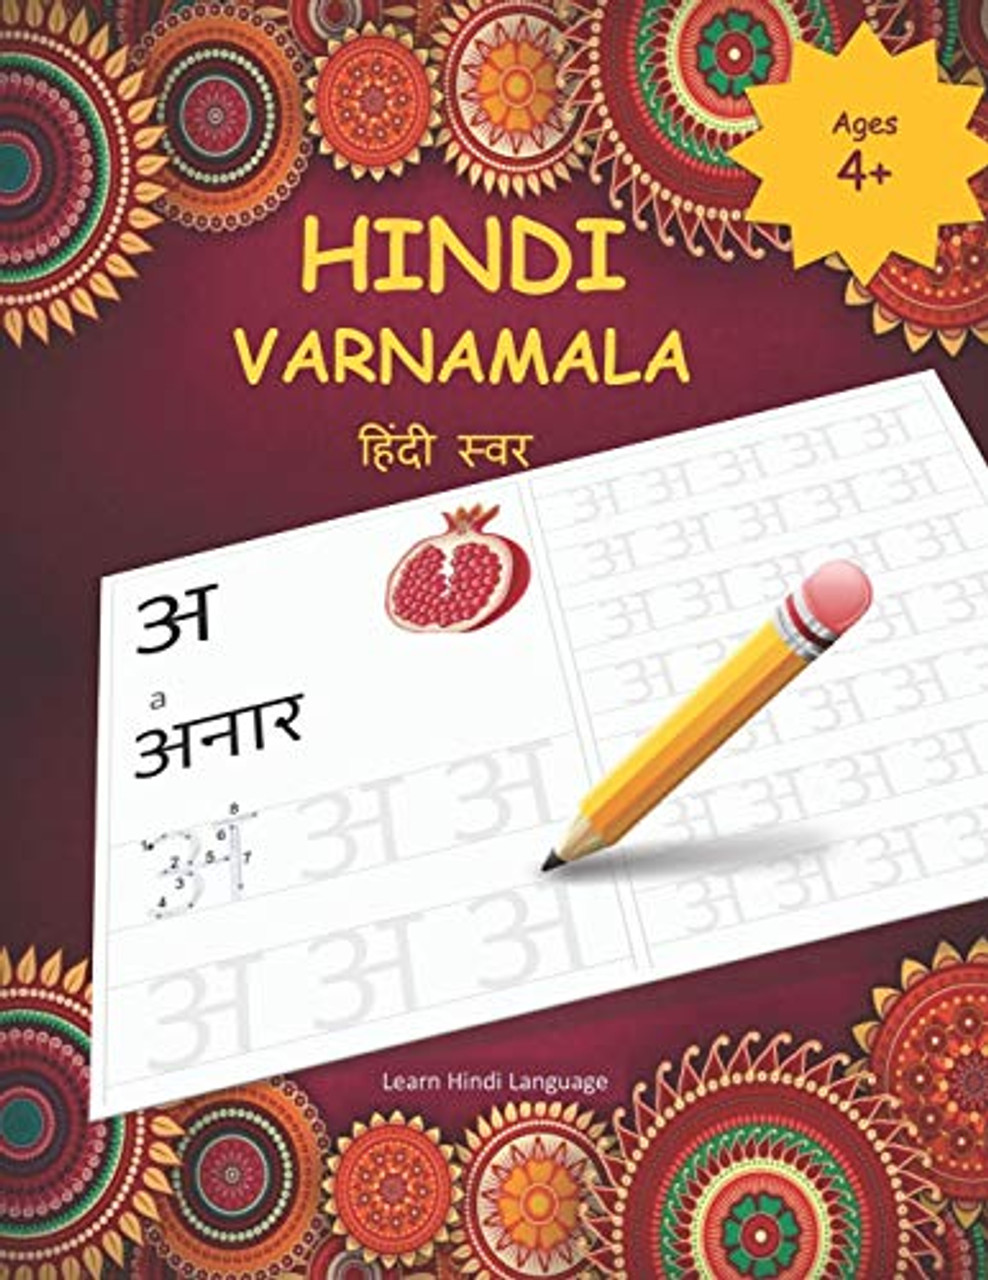 HINDI VARNAMALA: Hindi Alphabet Practice Workbook - Trace and Write Hindi  Letters (Learn Hindi Alphabets  Kids Educational Book Series)